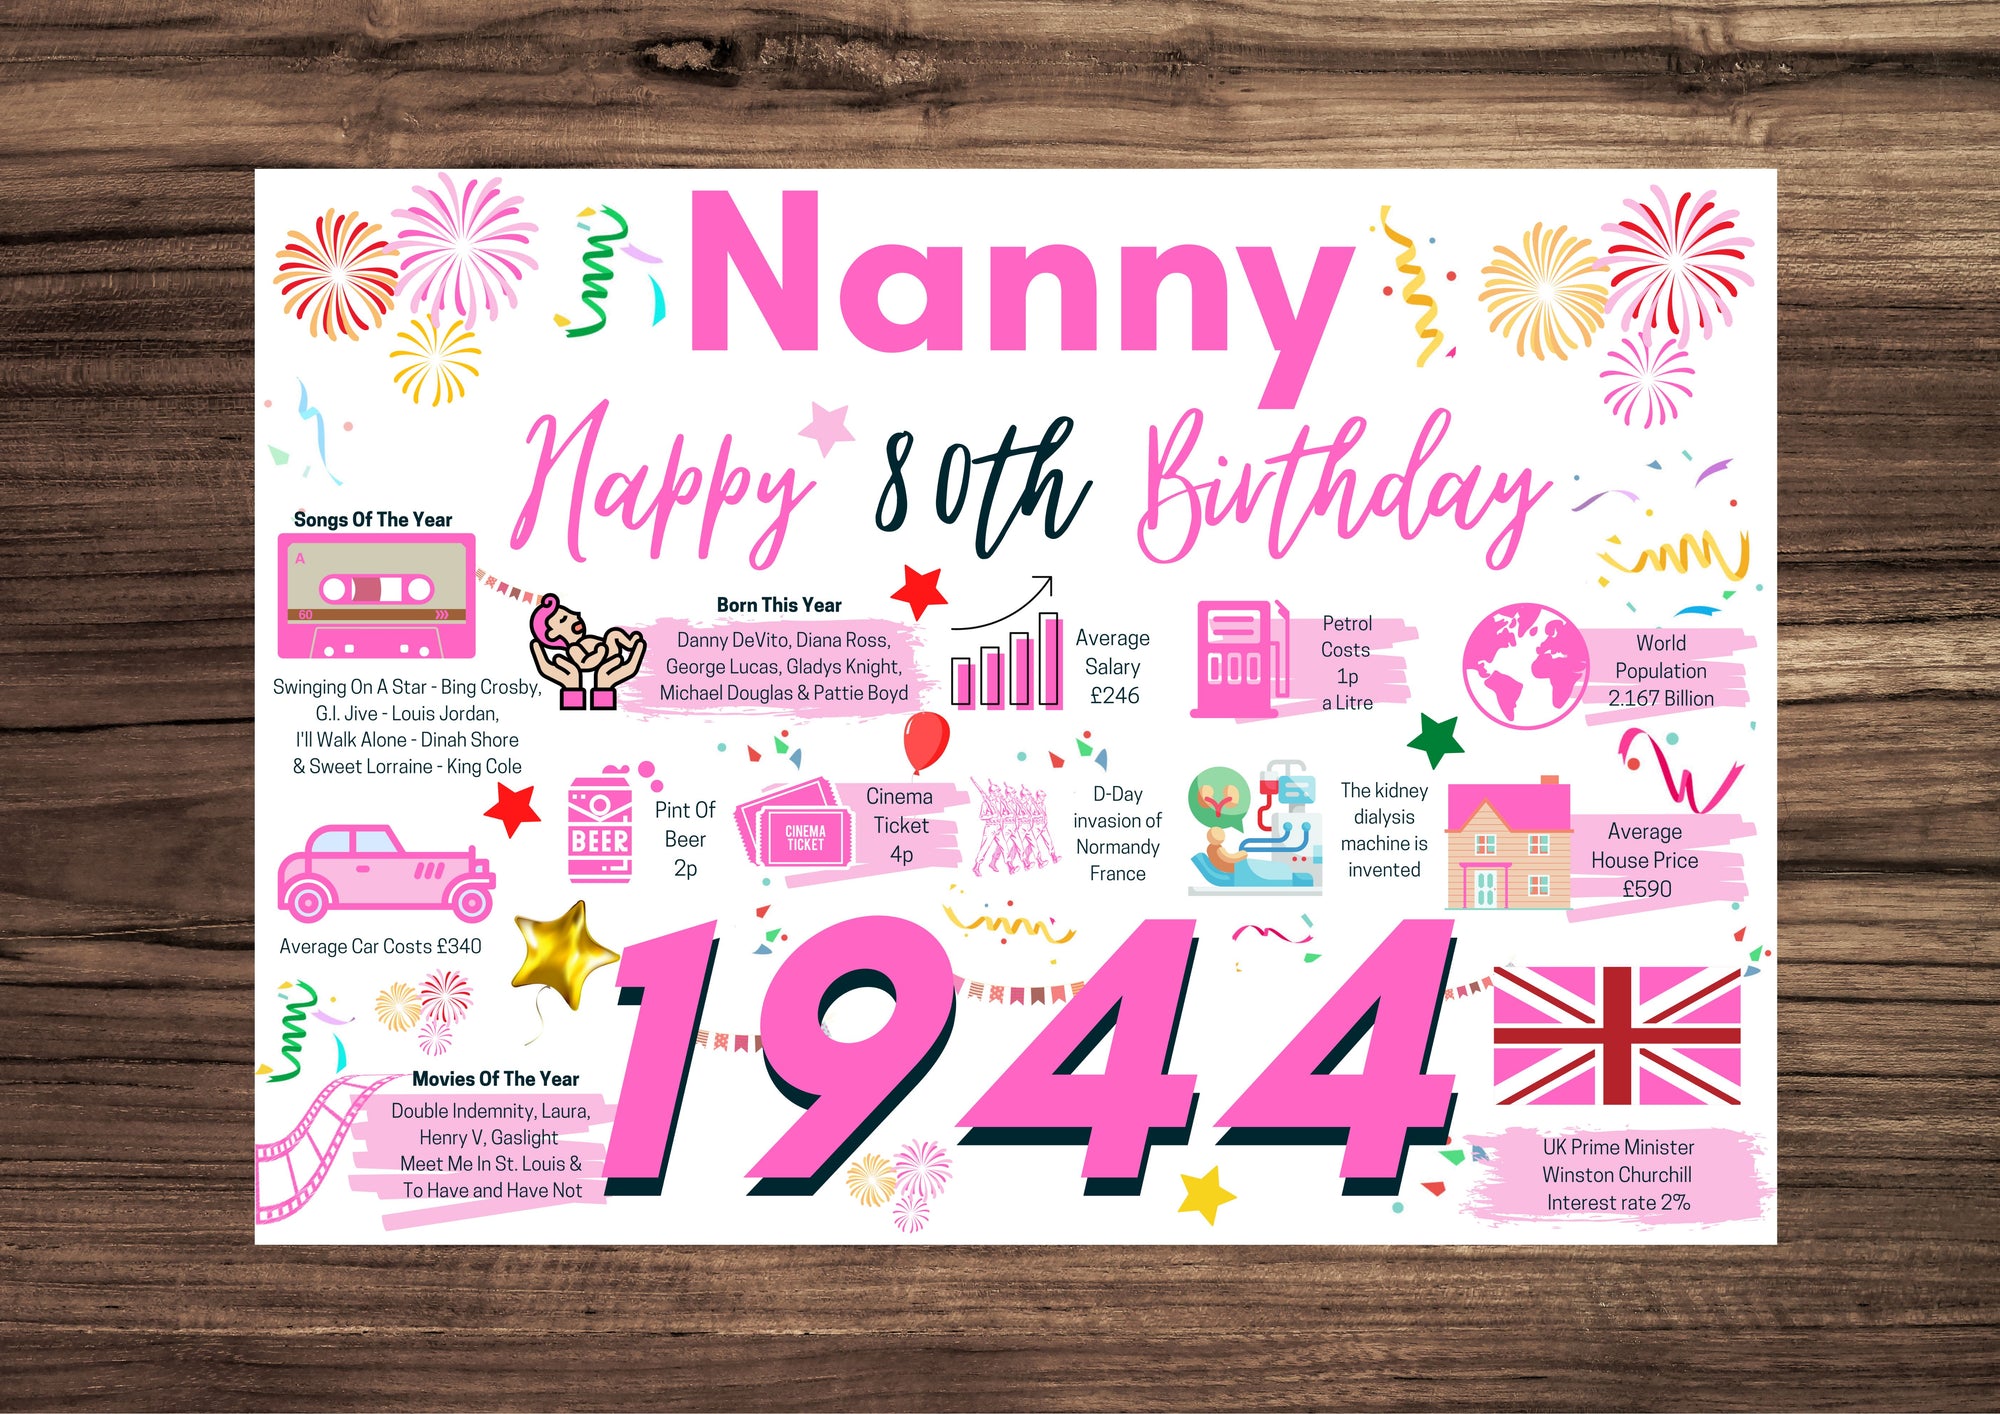 80th Birthday Card For Nanny, Born In 1944 Facts Milestone